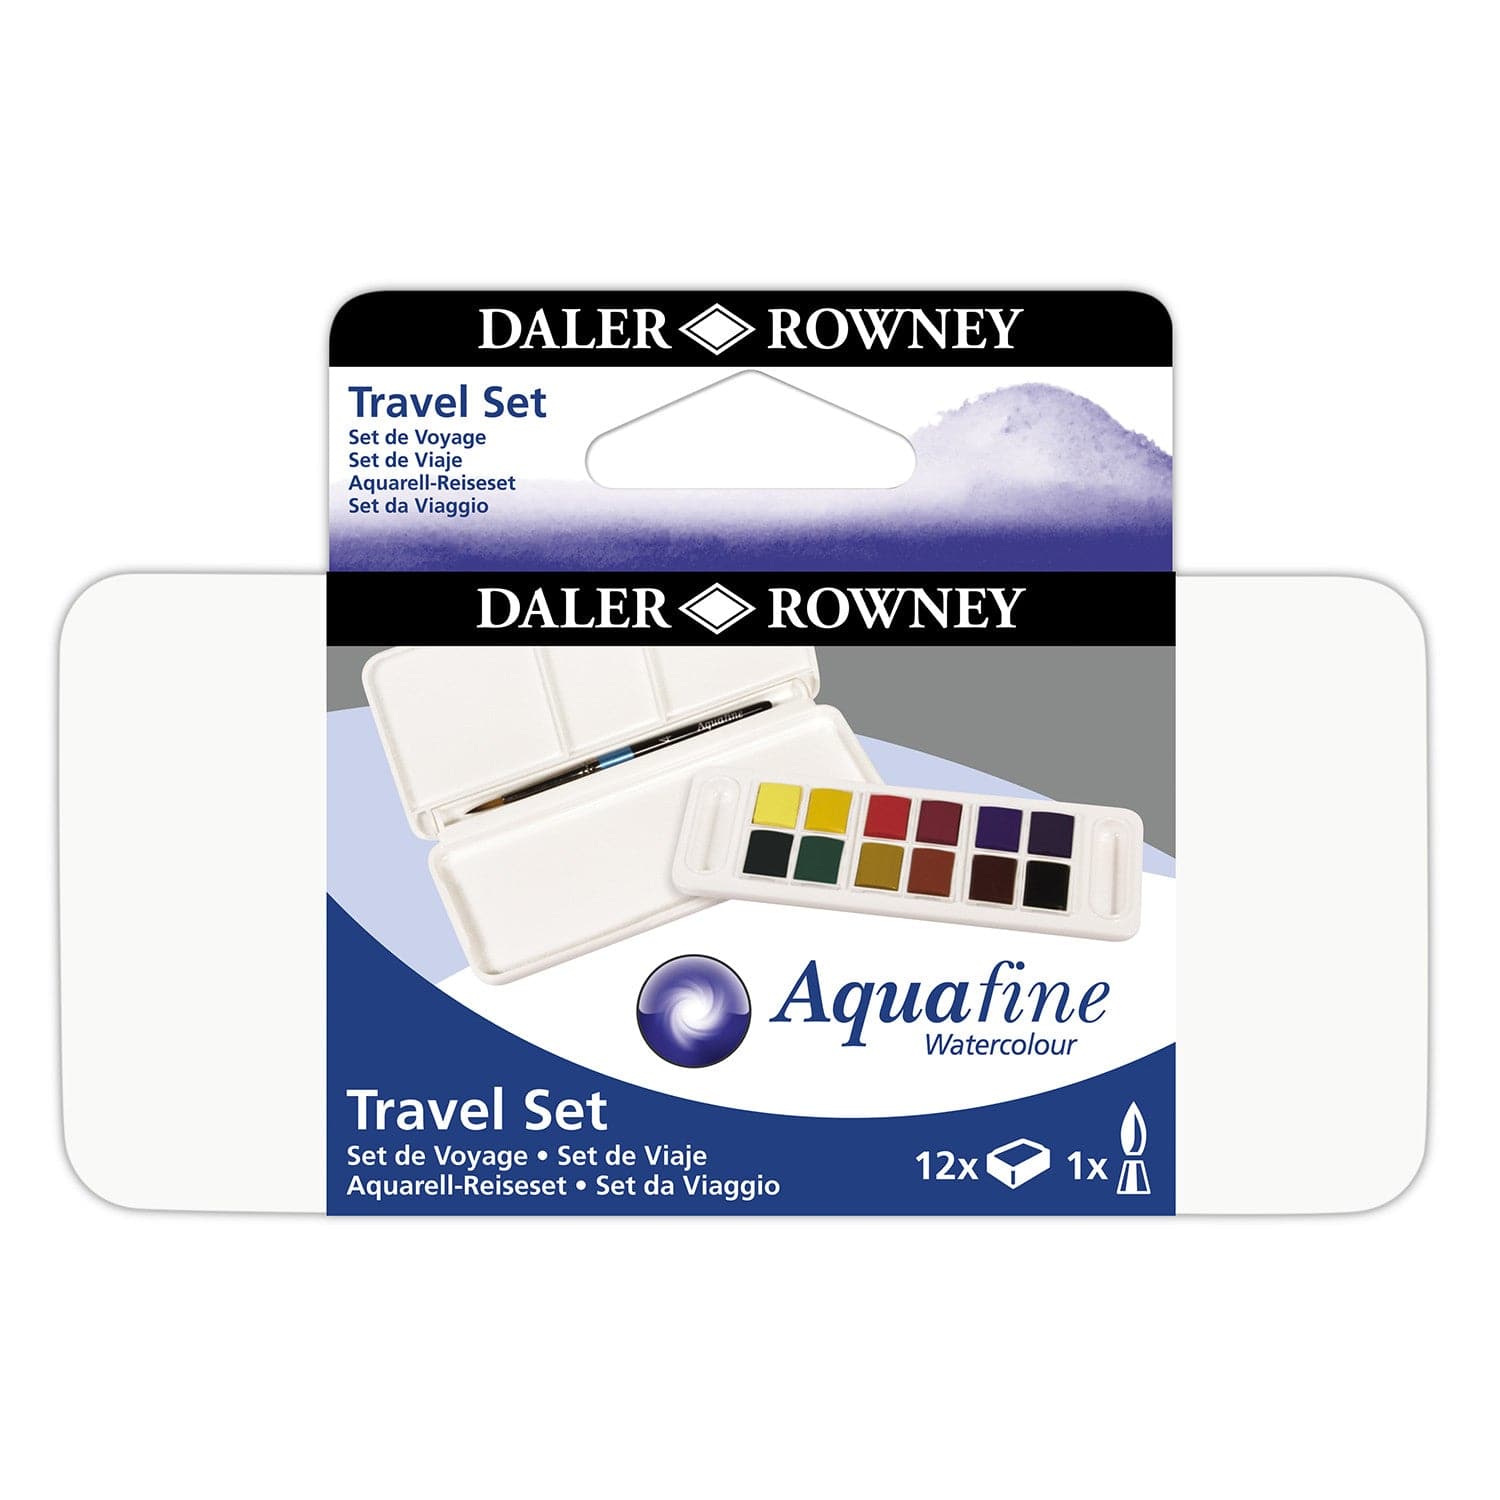 Daler Rowney Aquafine Watercolor Travel Set of 12